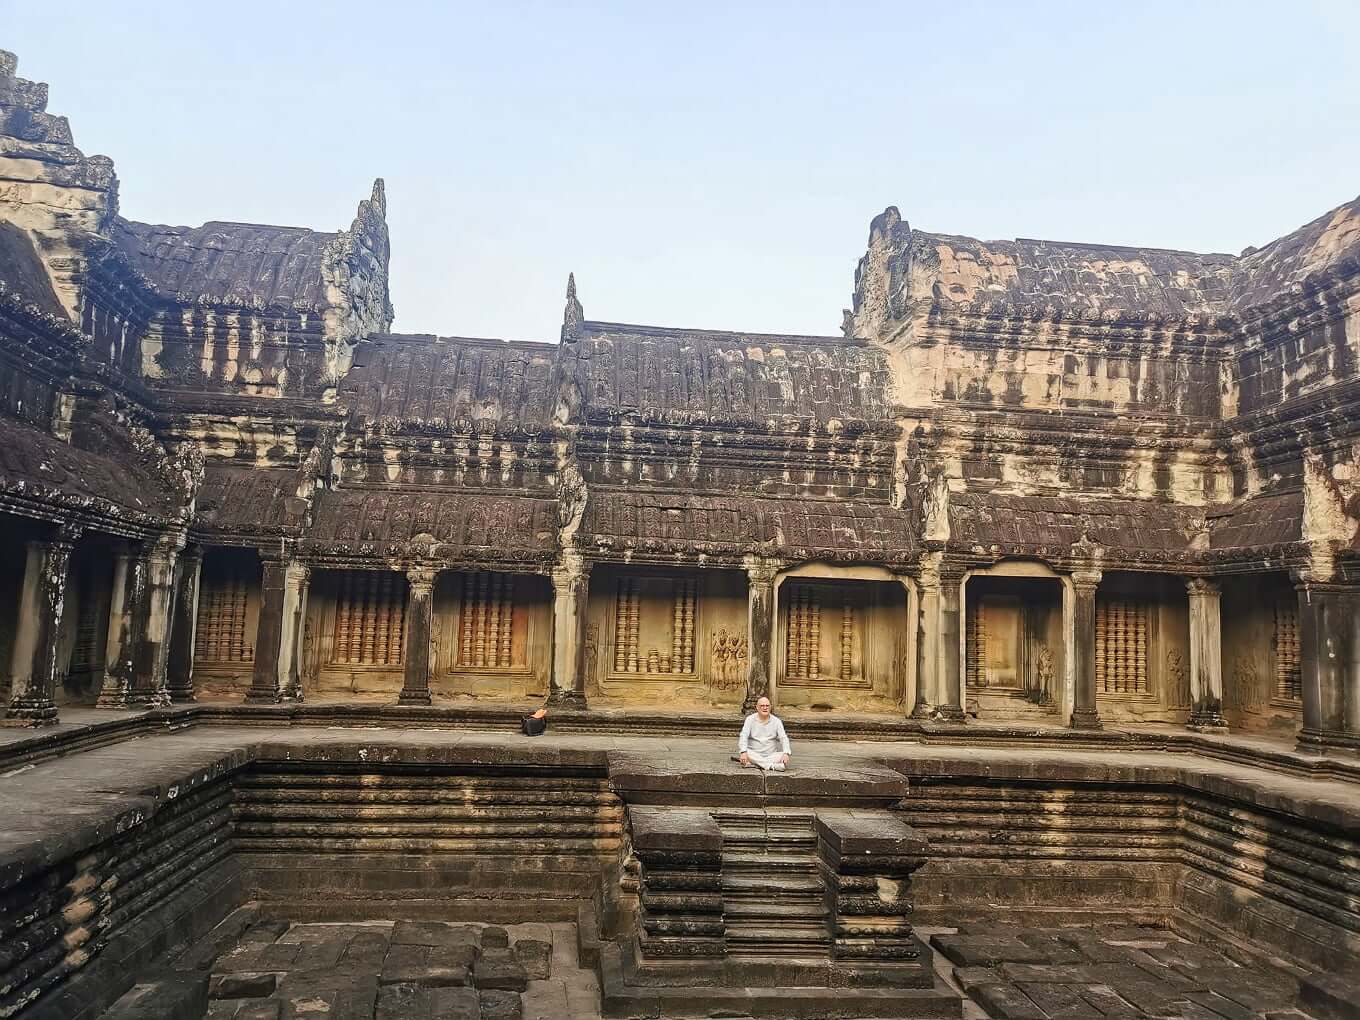 Cambodia-Itinerary-13-Days-Angkor-Wat-Siem-Reap-6.jpeg